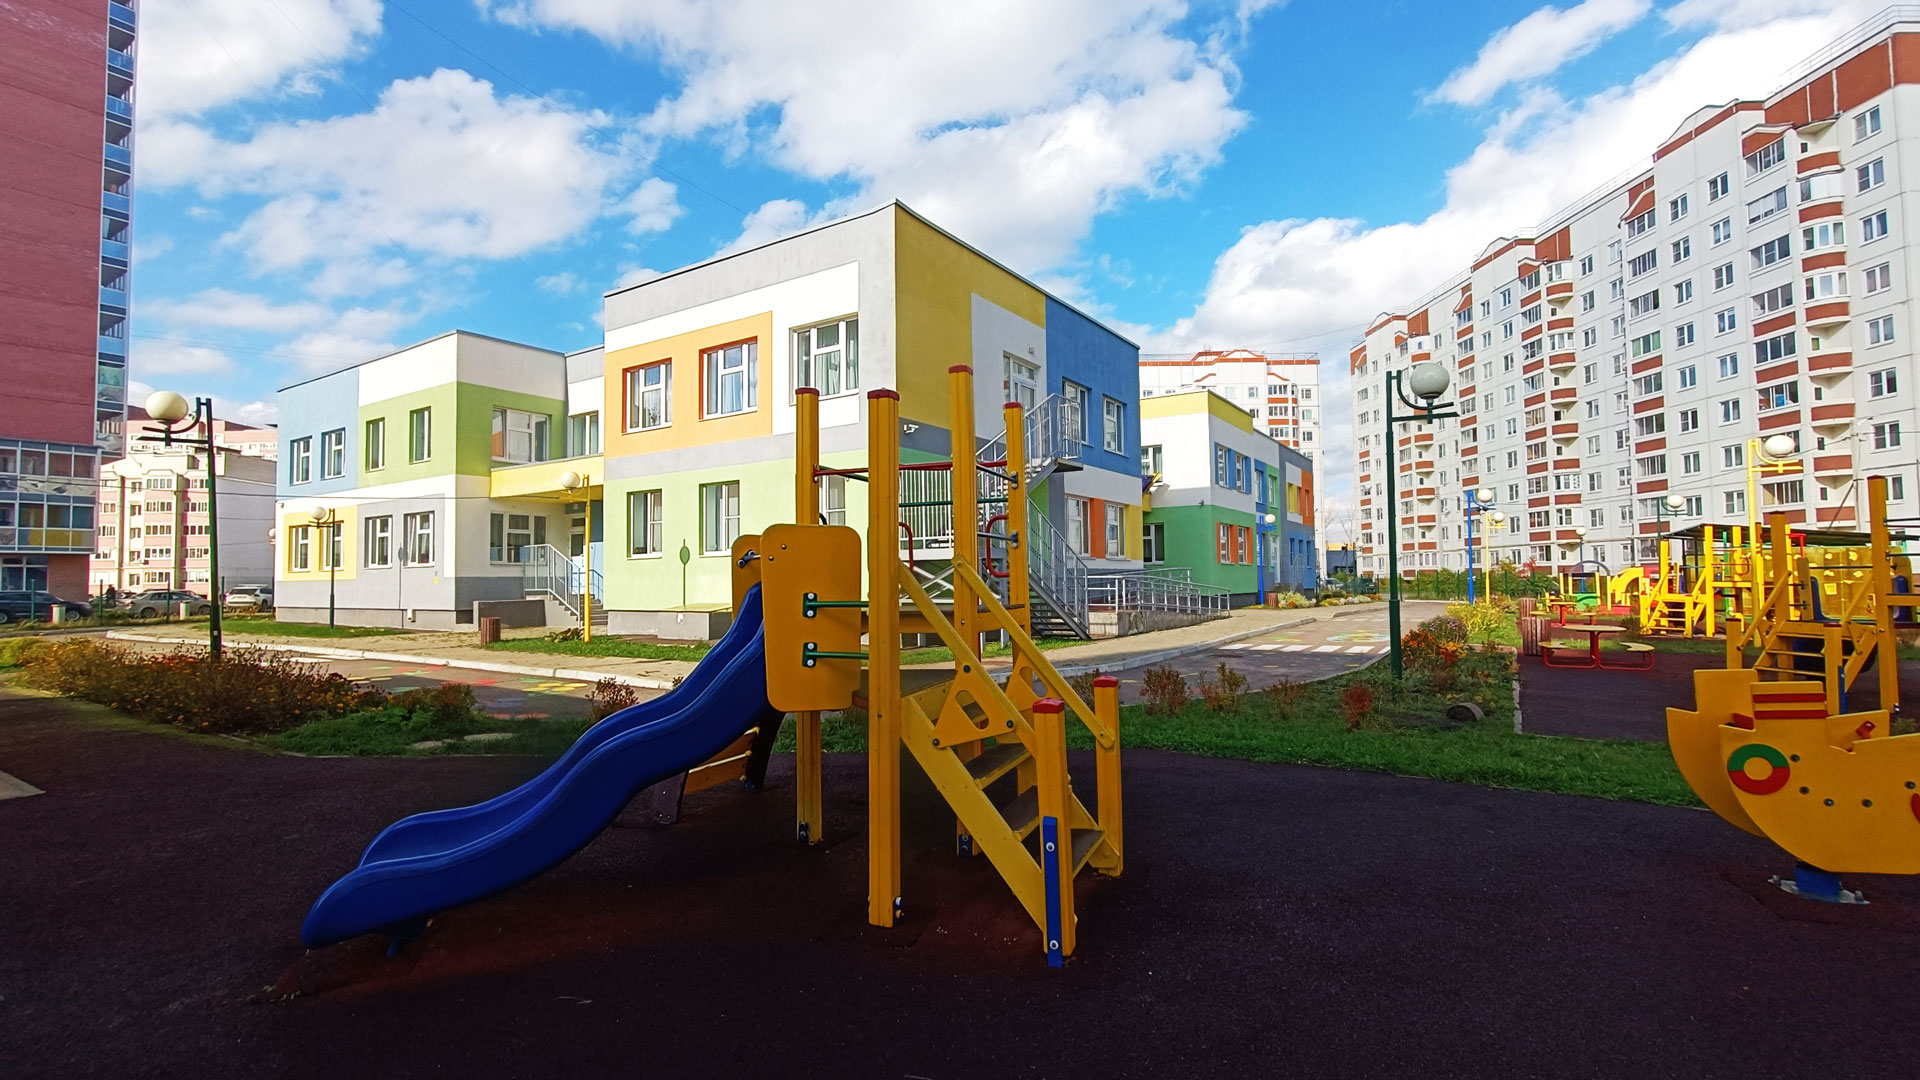 Детский сад 98 Ярославль: площадка для спортивных занятий.